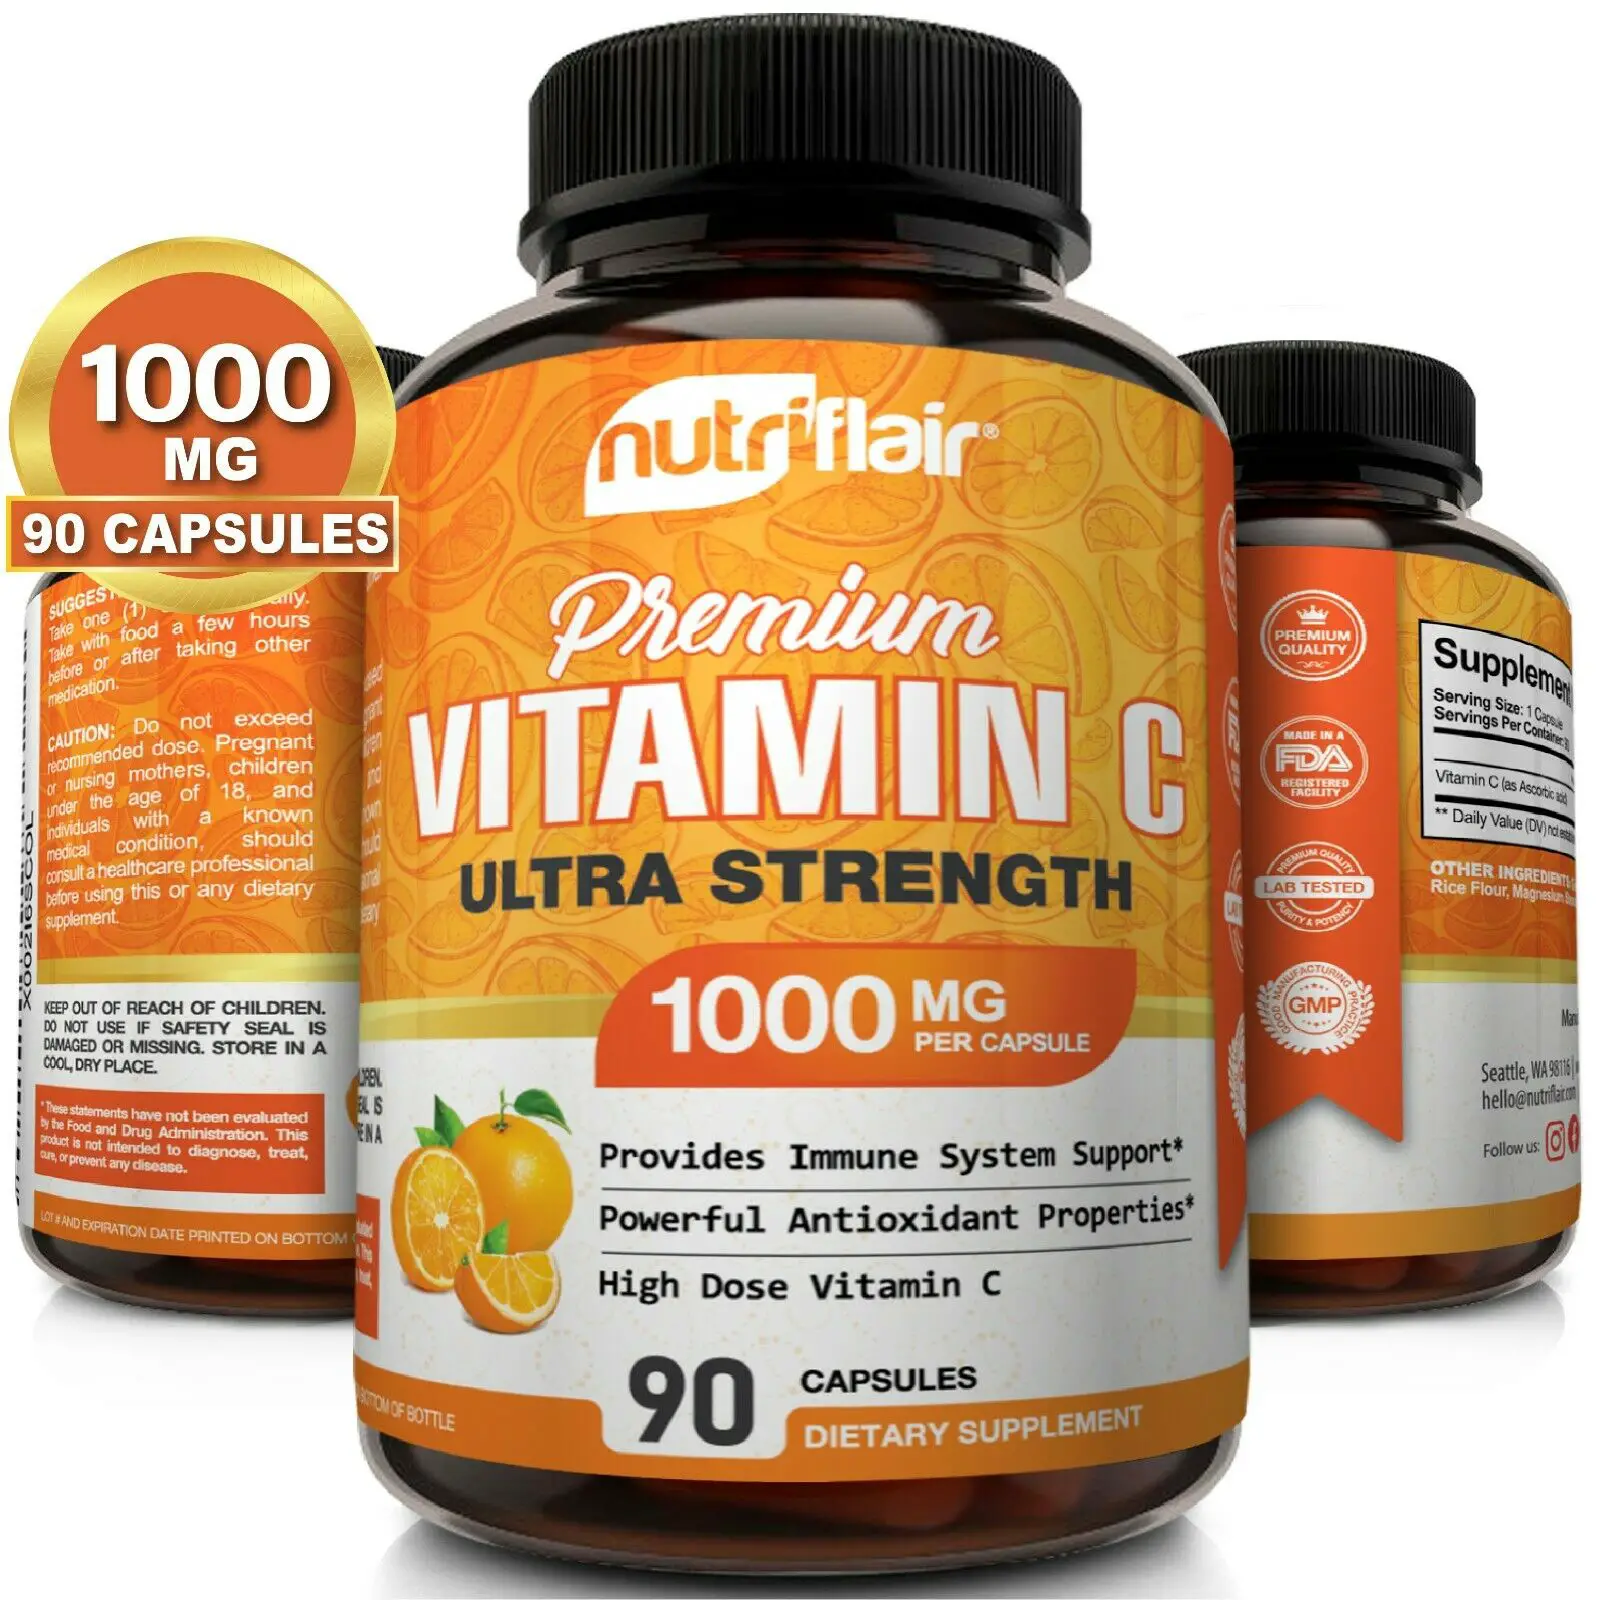 NutriFlair Pure Vitamin C Supplement 1000mg per Capsule ...